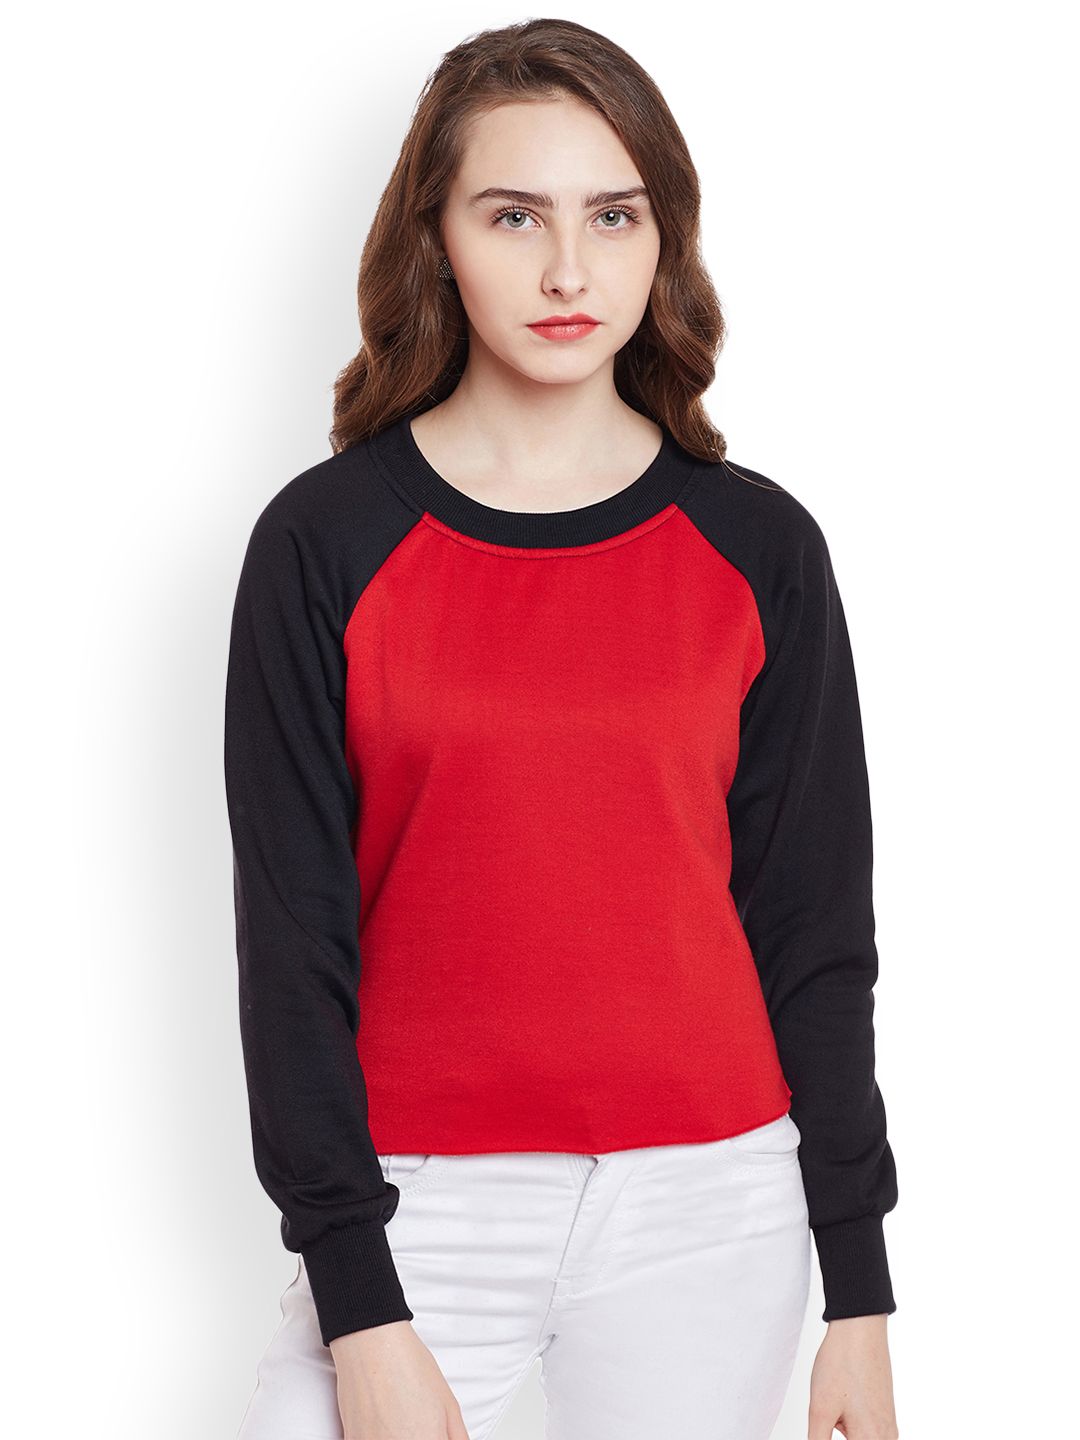 Belle Fille Women Red & Black Solid Sweatshirt Price in India